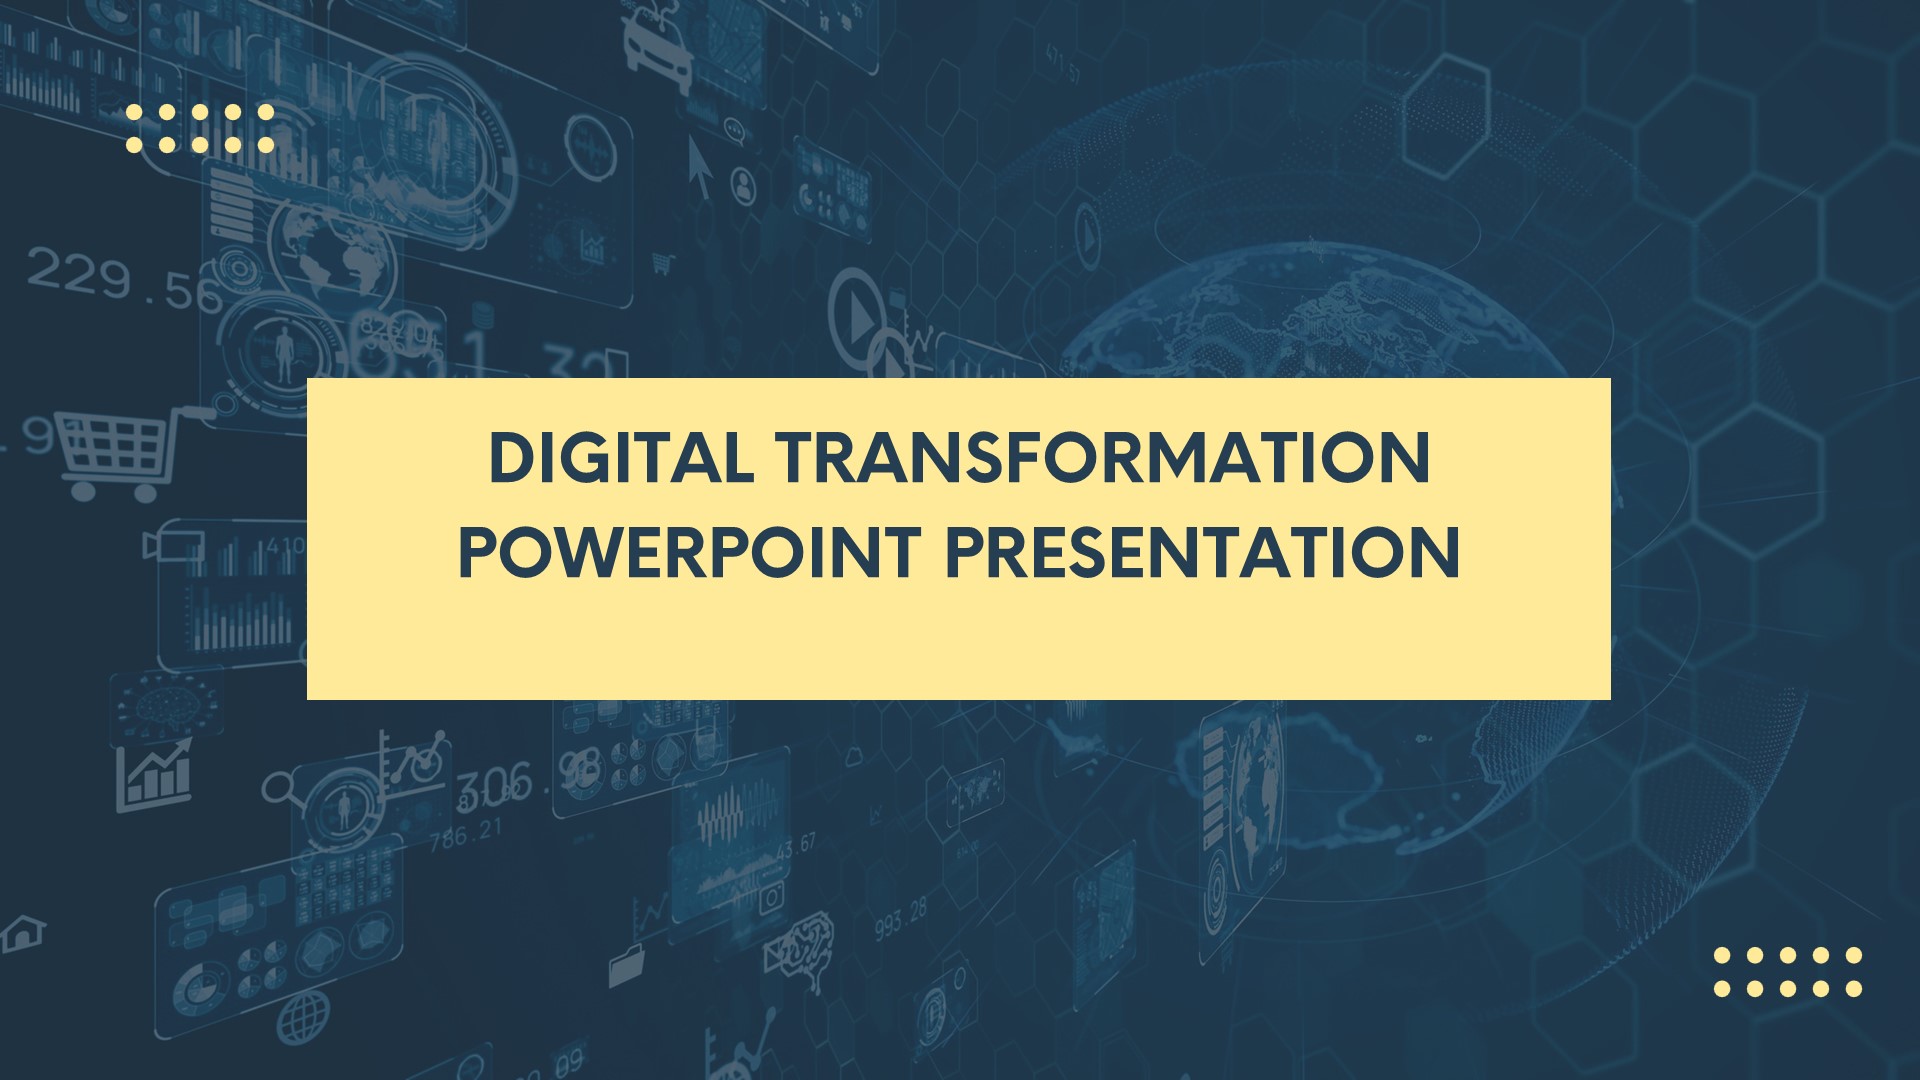 Digital Transformation PowerPoint Presentation